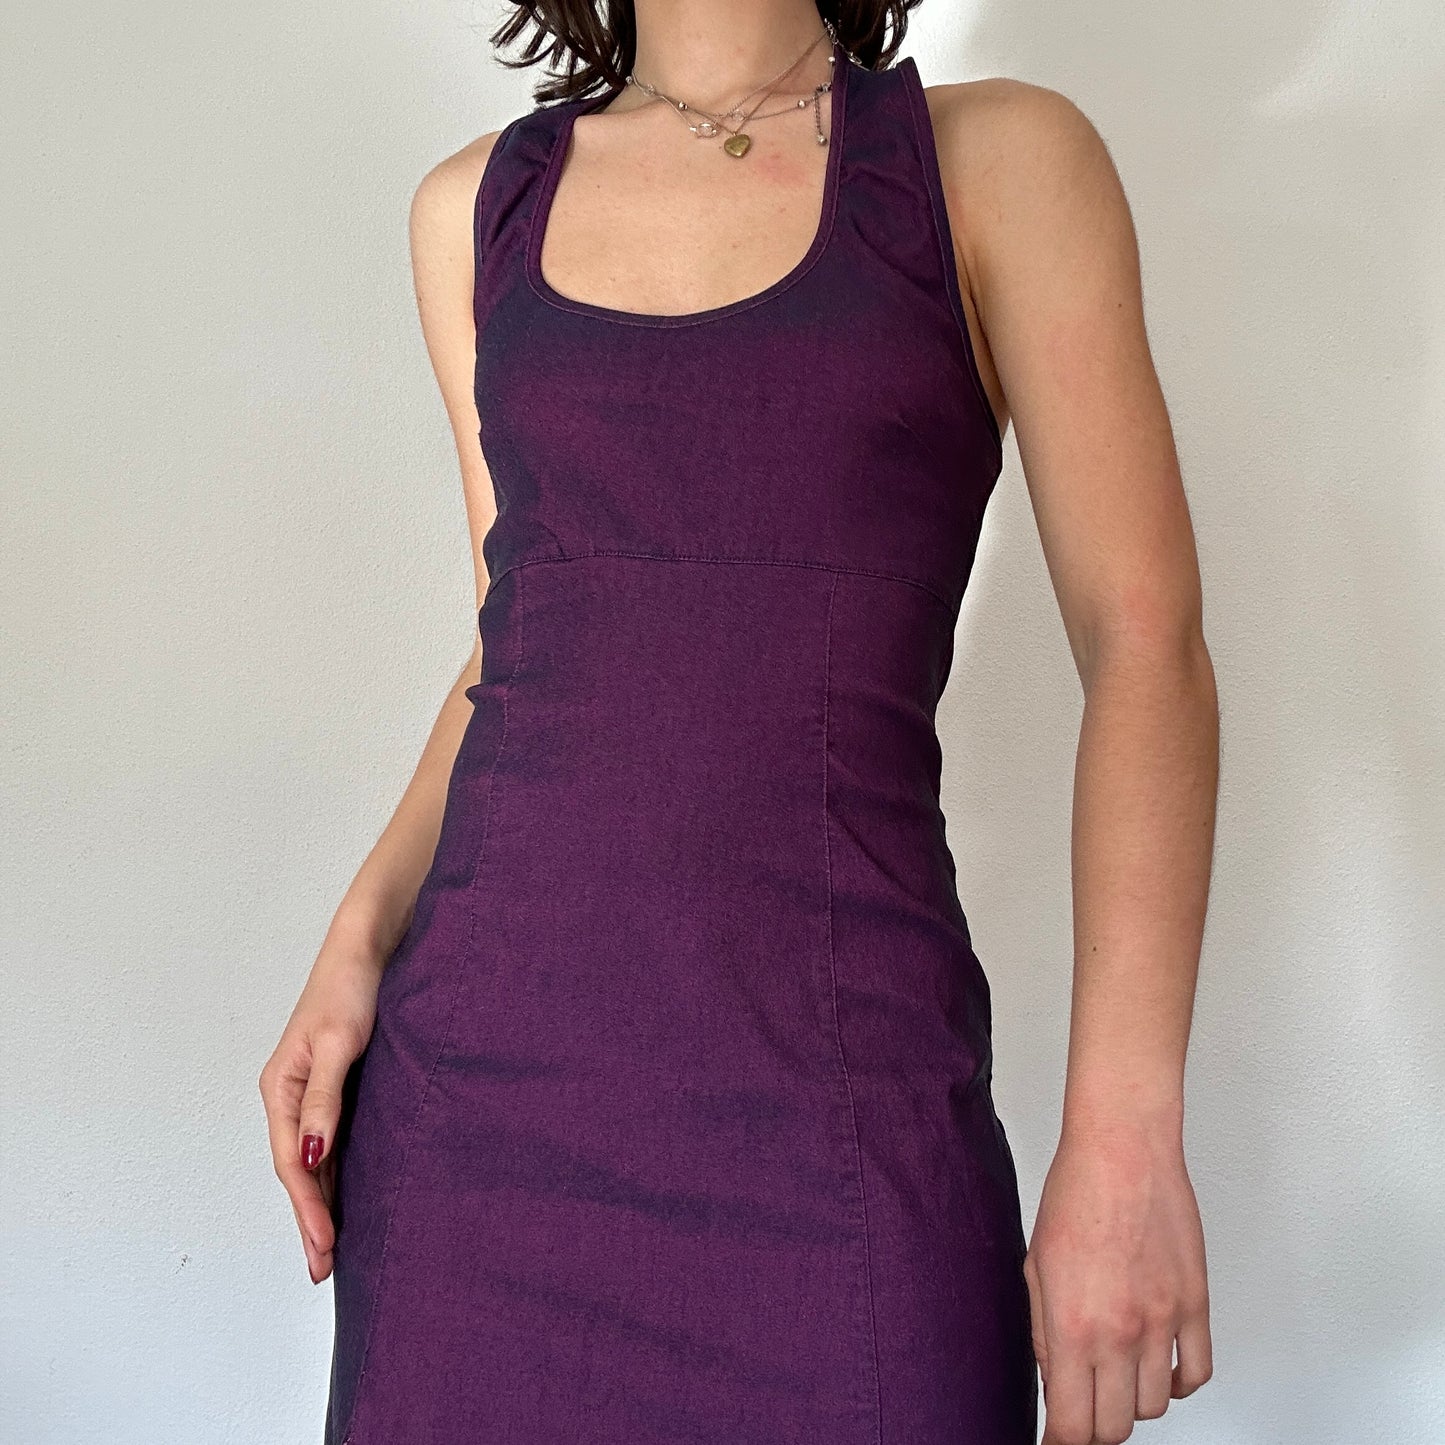 Y2K Halterneck Purple Dress